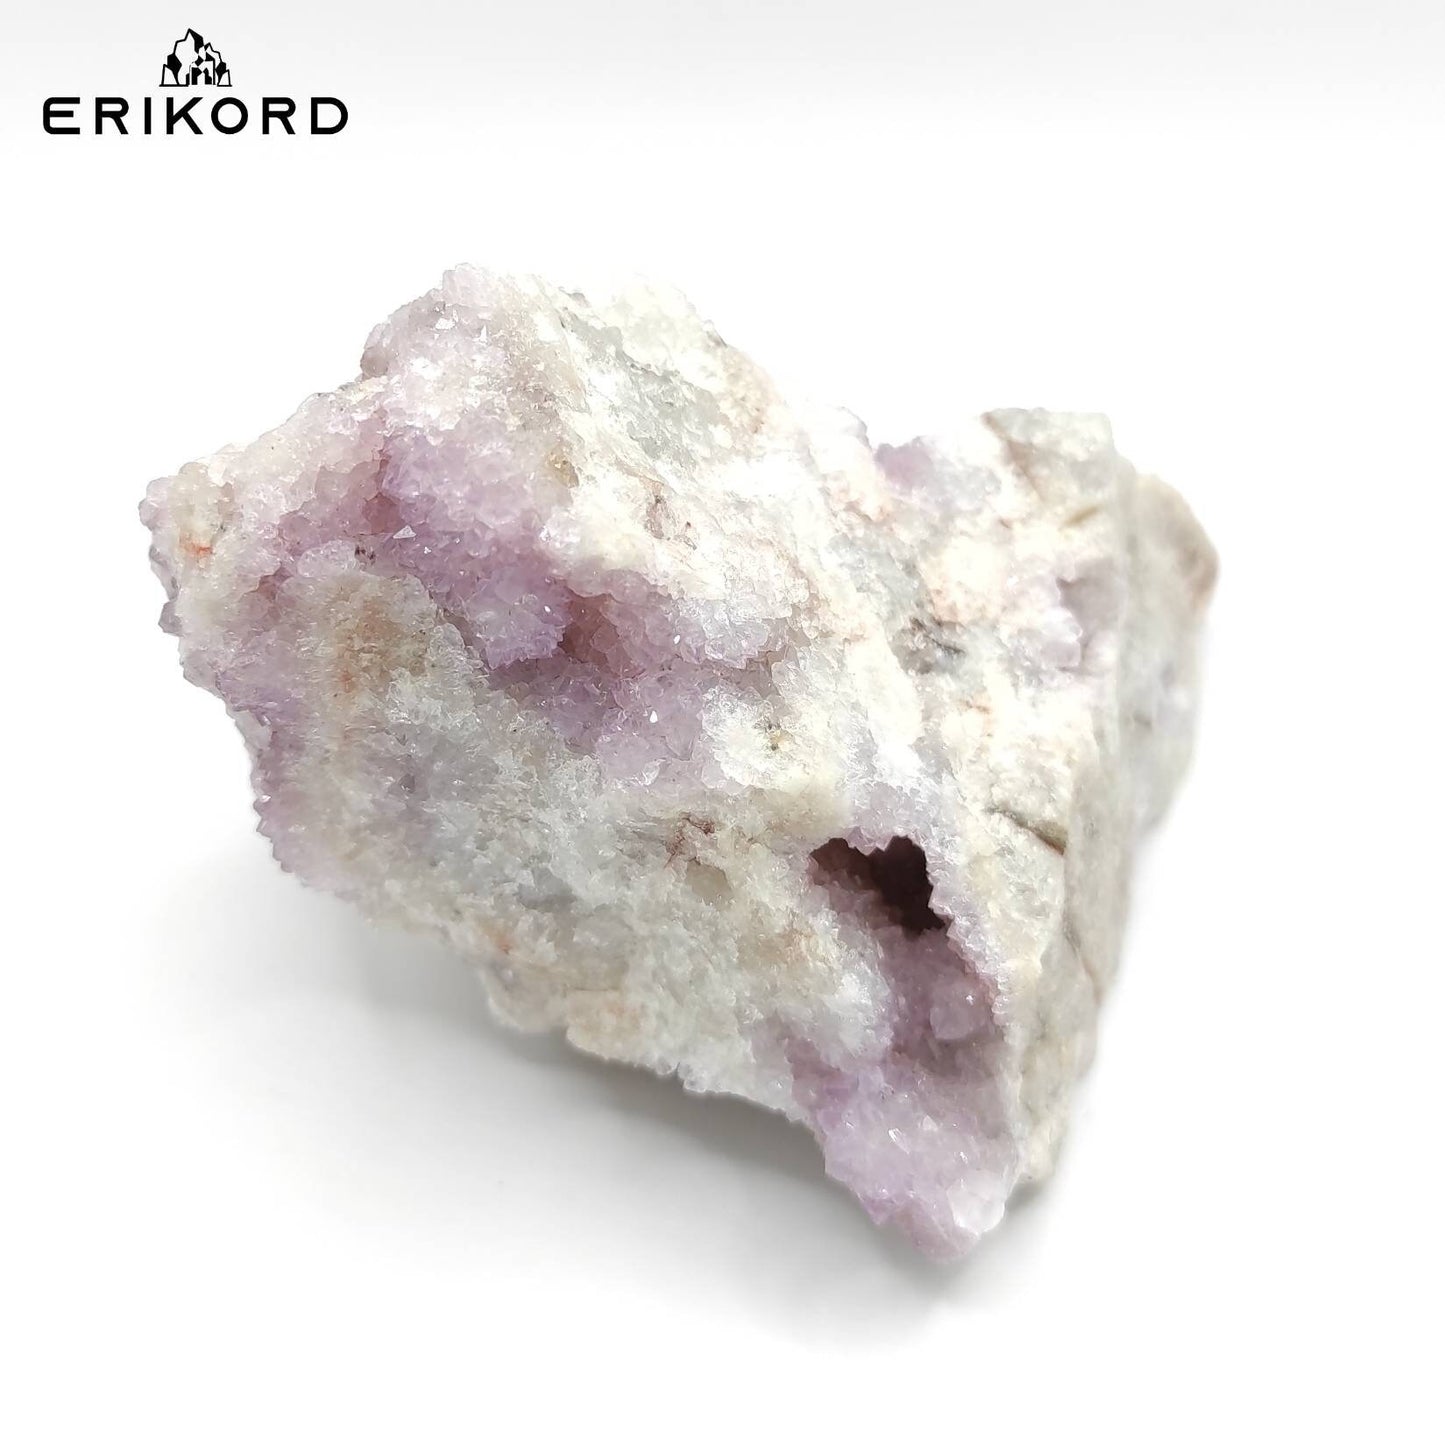 215g Thunder Bay Amethyst Crystal - Natural Amethyst Mineral Specimen - Ontario Canada - Spirit Quartz Style Amethyst - Raw Ethical Crystals